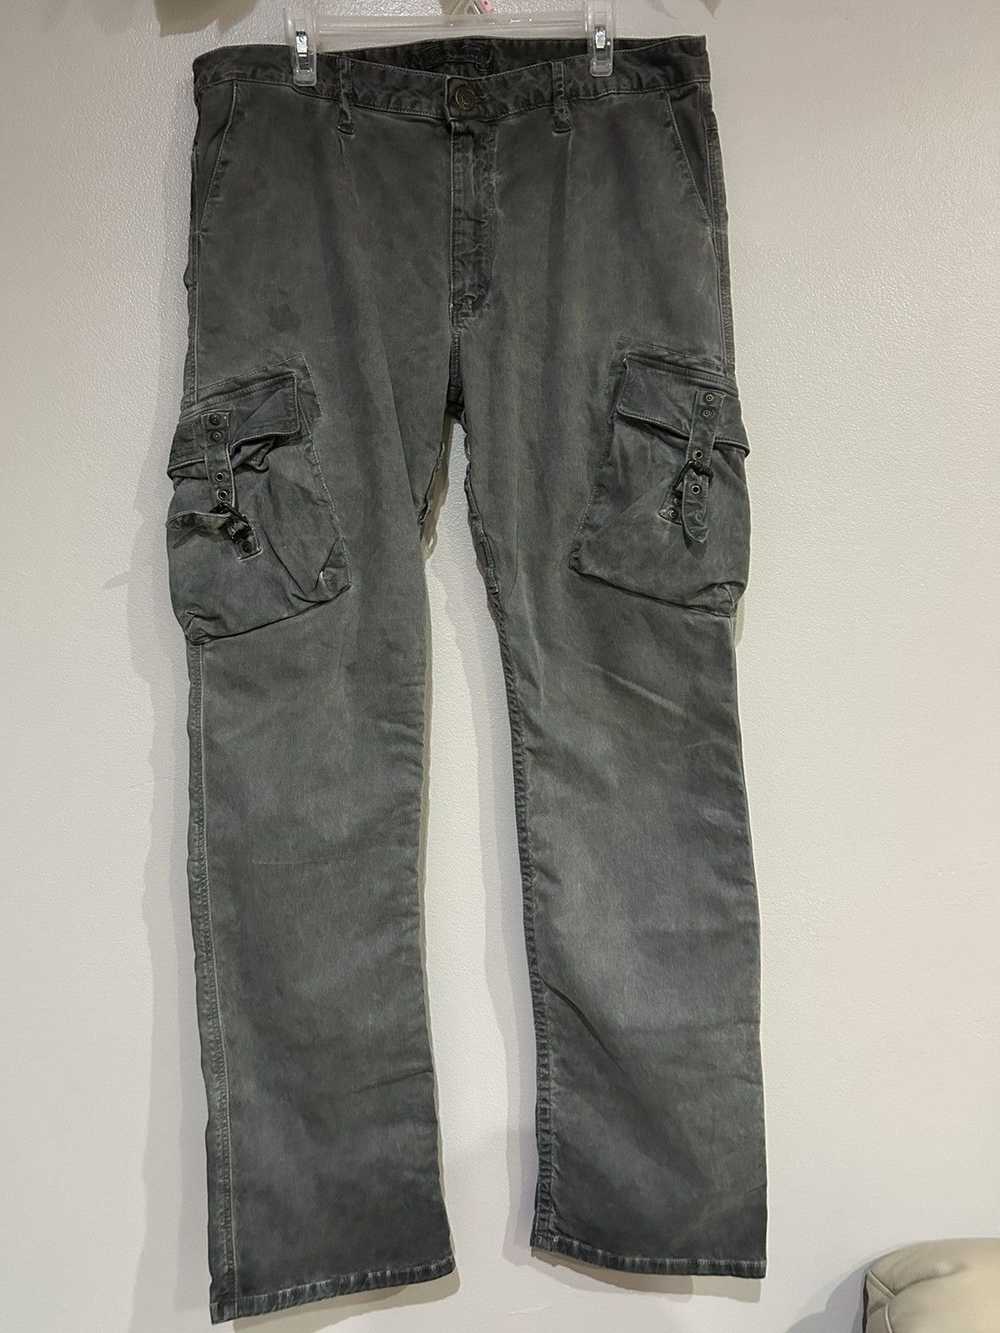 Designer × Robins Jeans Robin predator jeans 36 - image 4